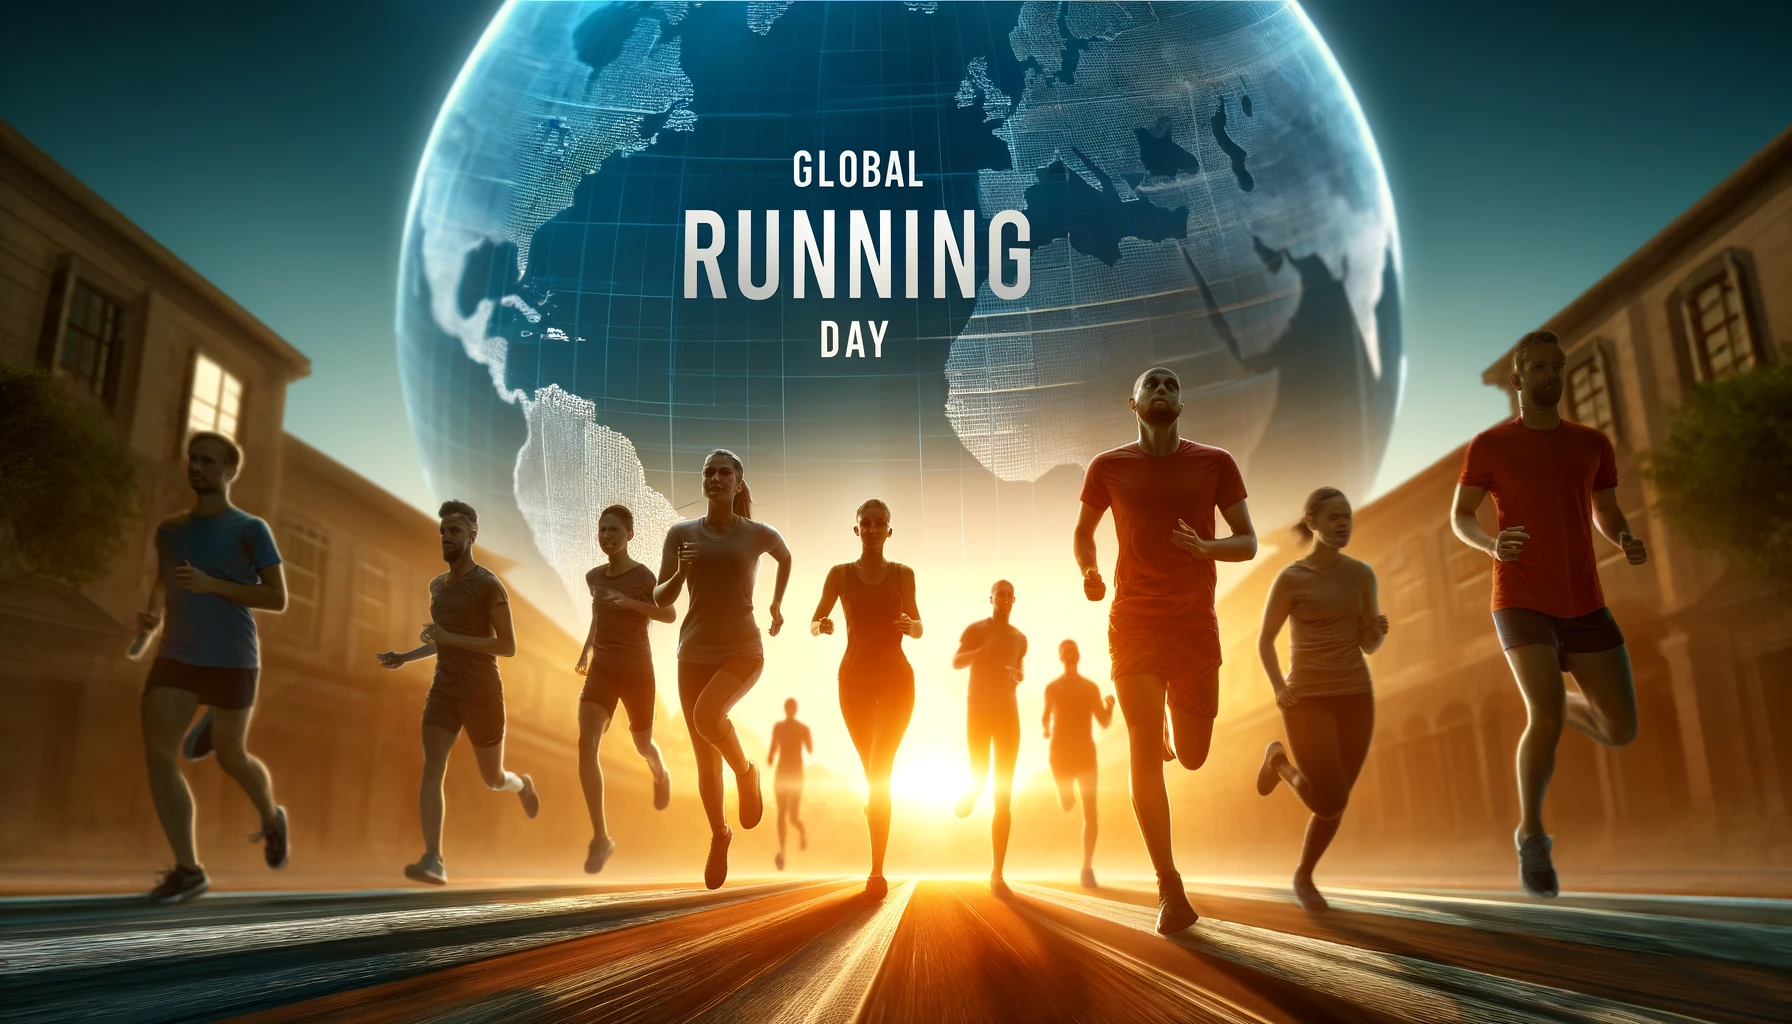 Global Running Day